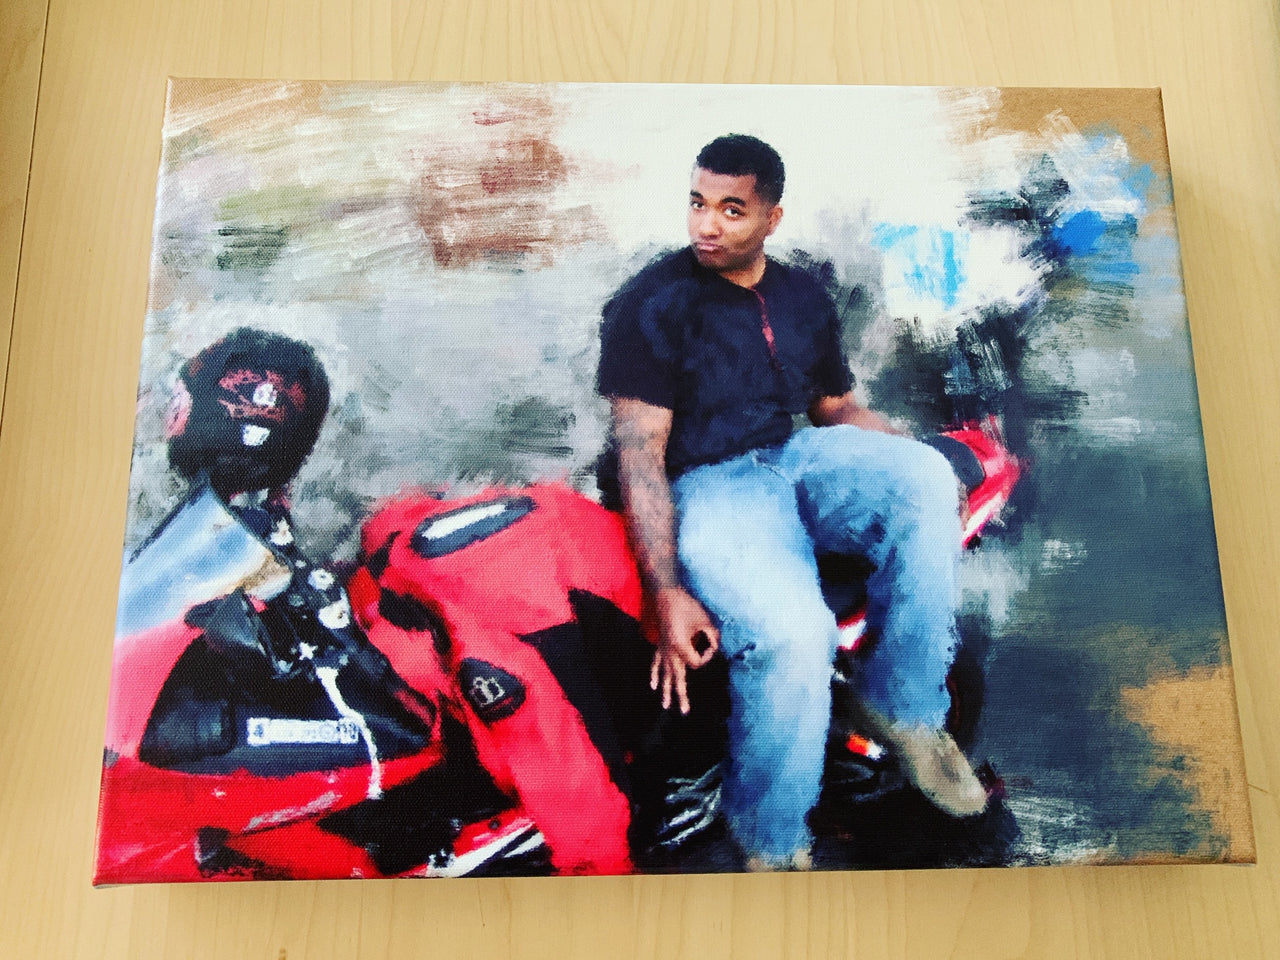 Buy latest High Quality Custom Canvas Print Motorcycle Artwork - I AM POWERSPORTS